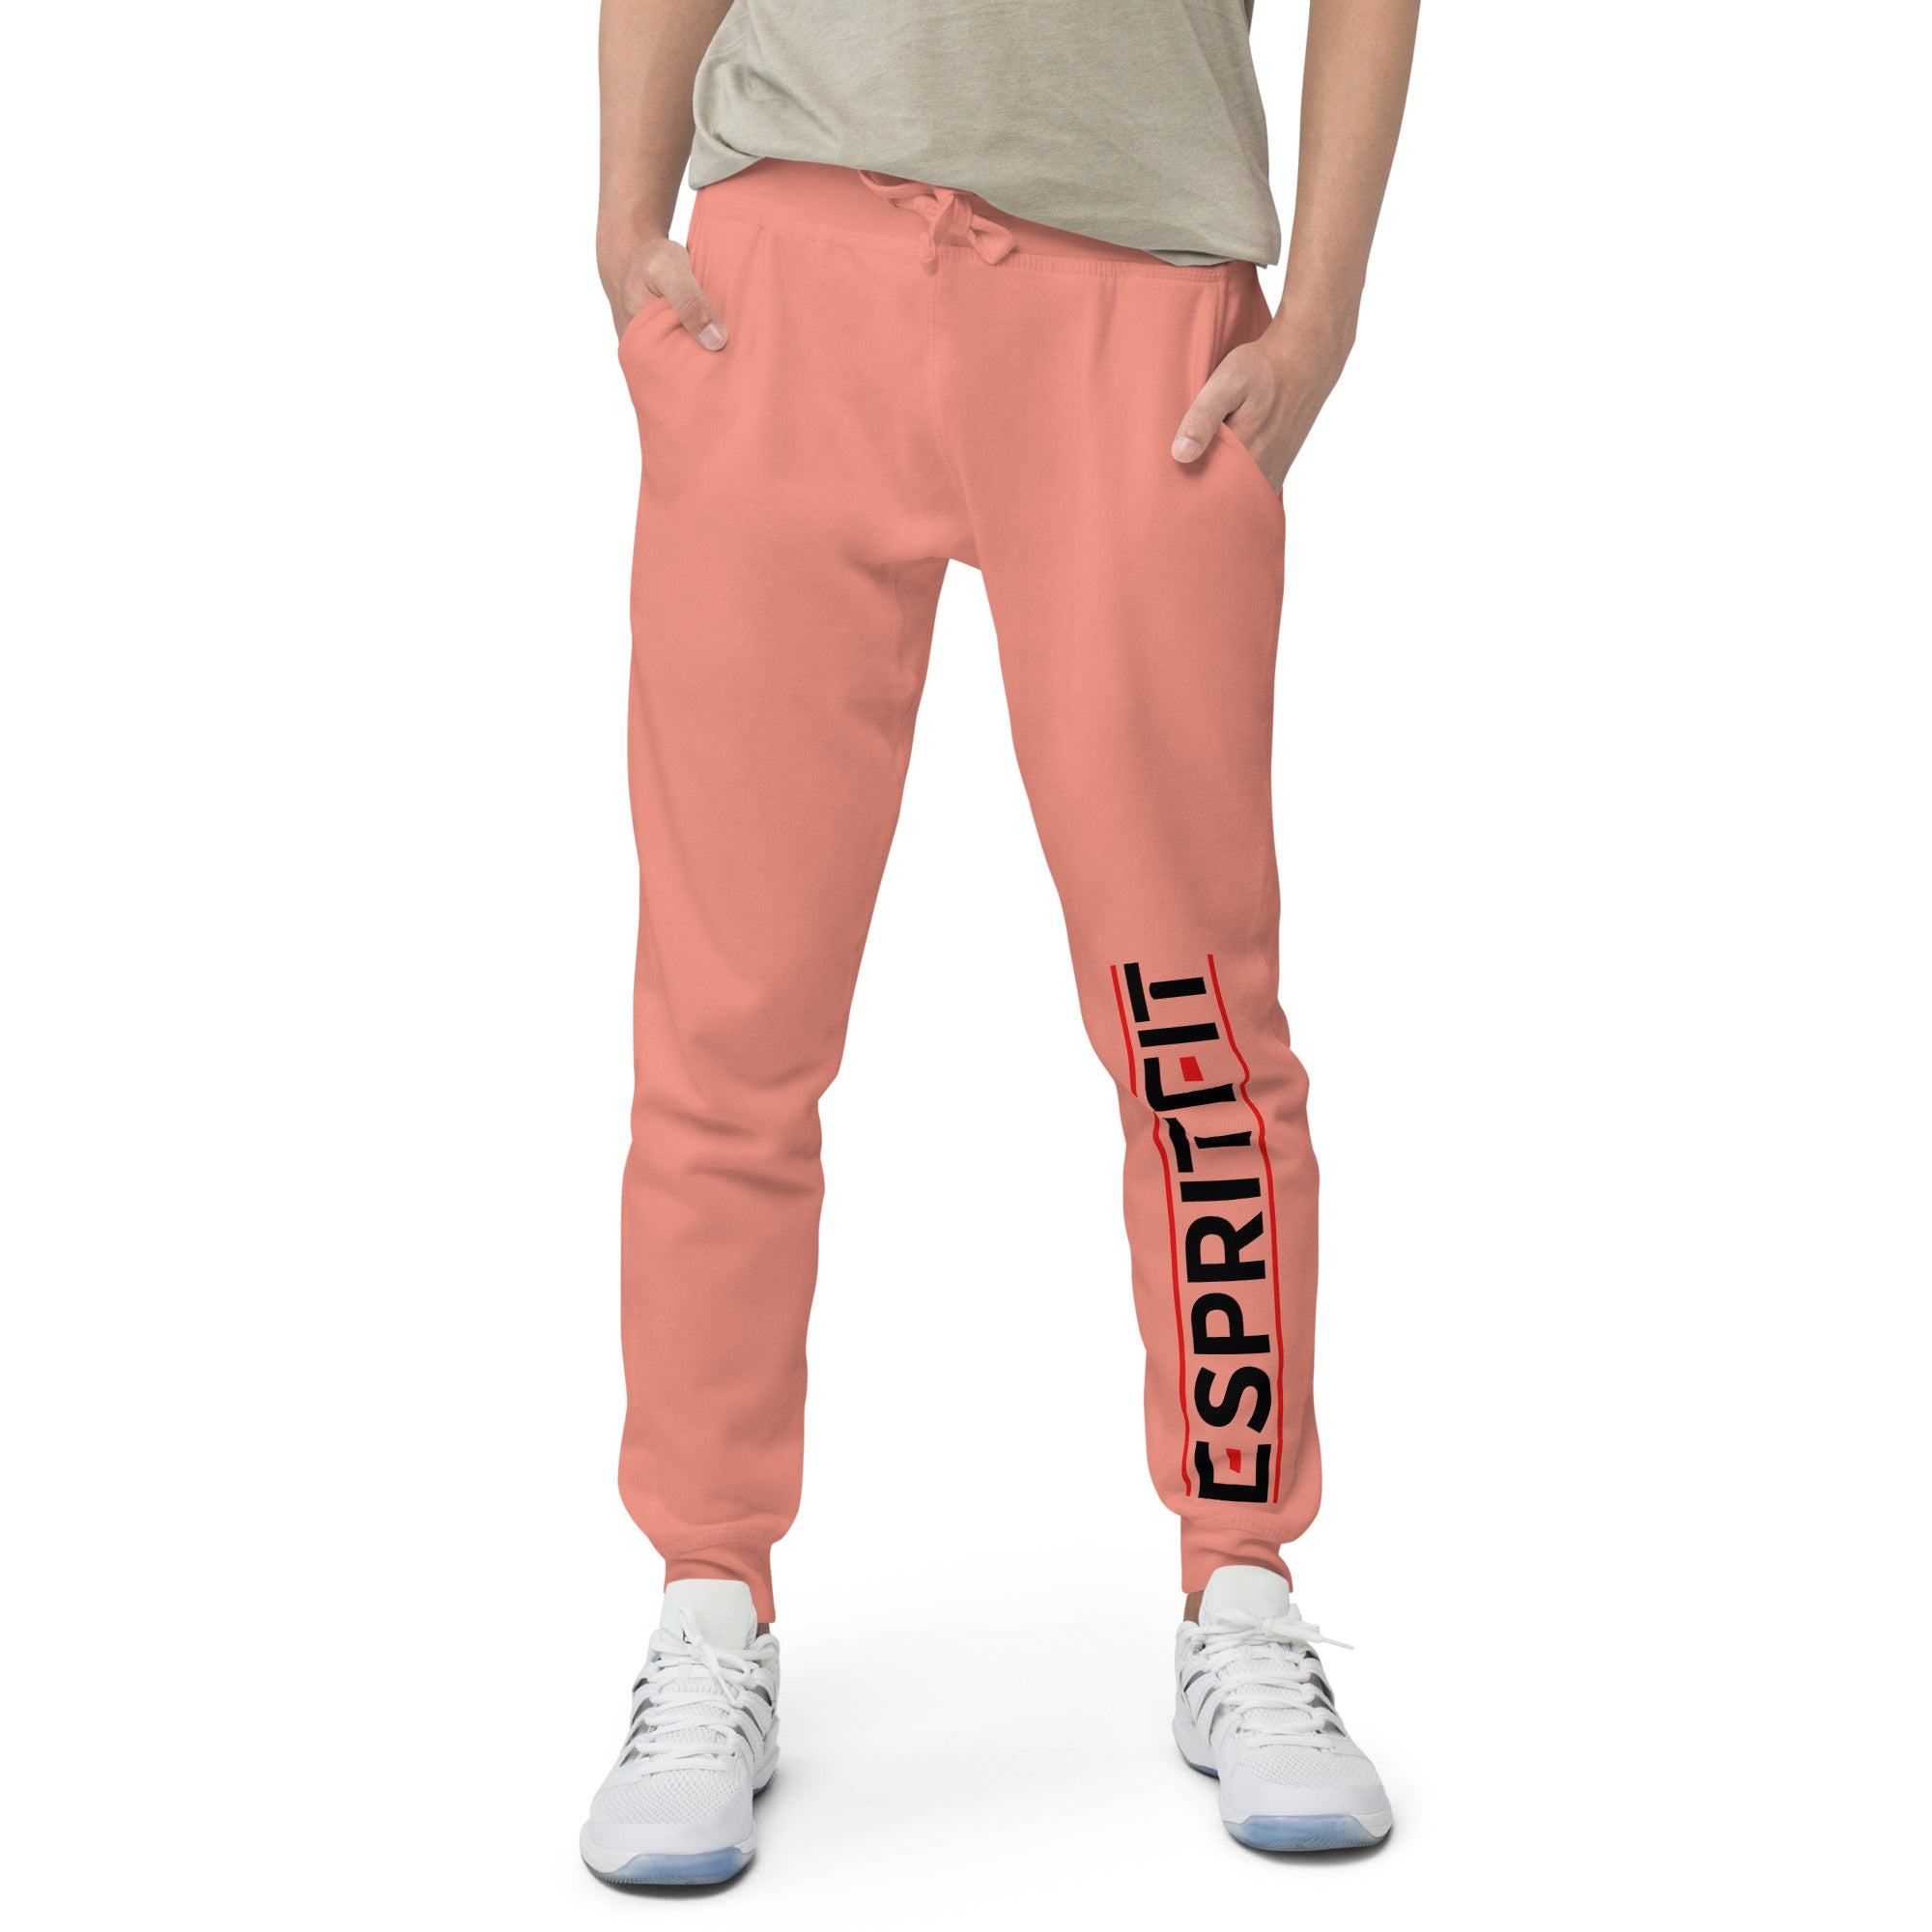 Espritfit ComfortArc Fleece Pants - Espritfit